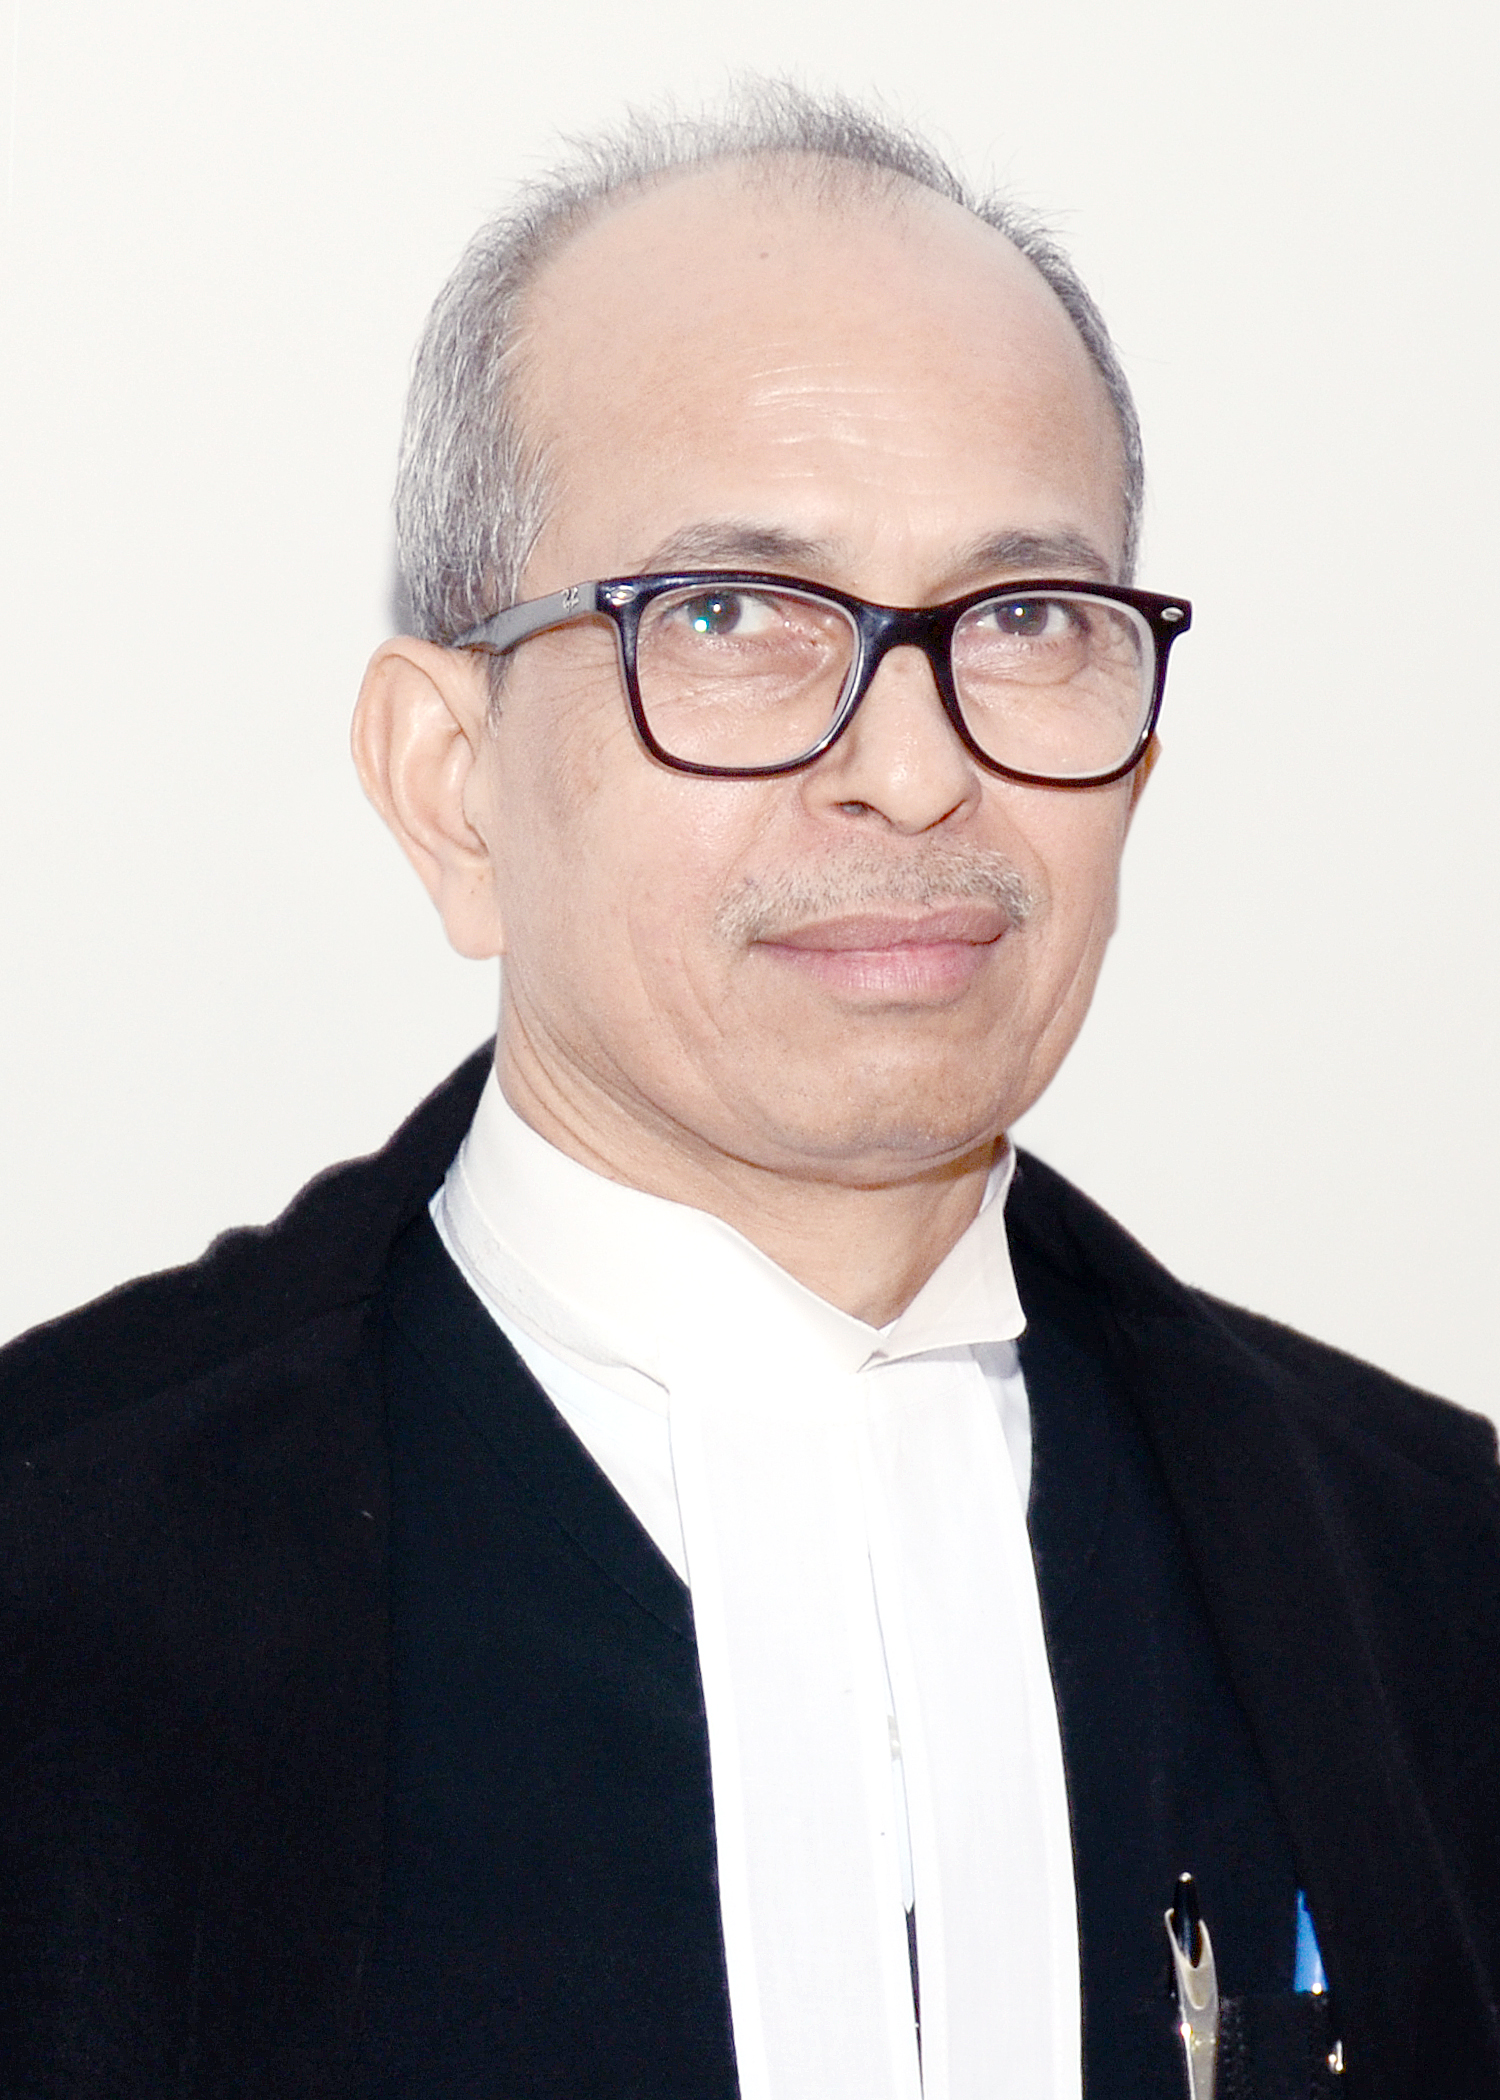 Hon’ble Mr. Justice Satyendra Singh Chauhan 